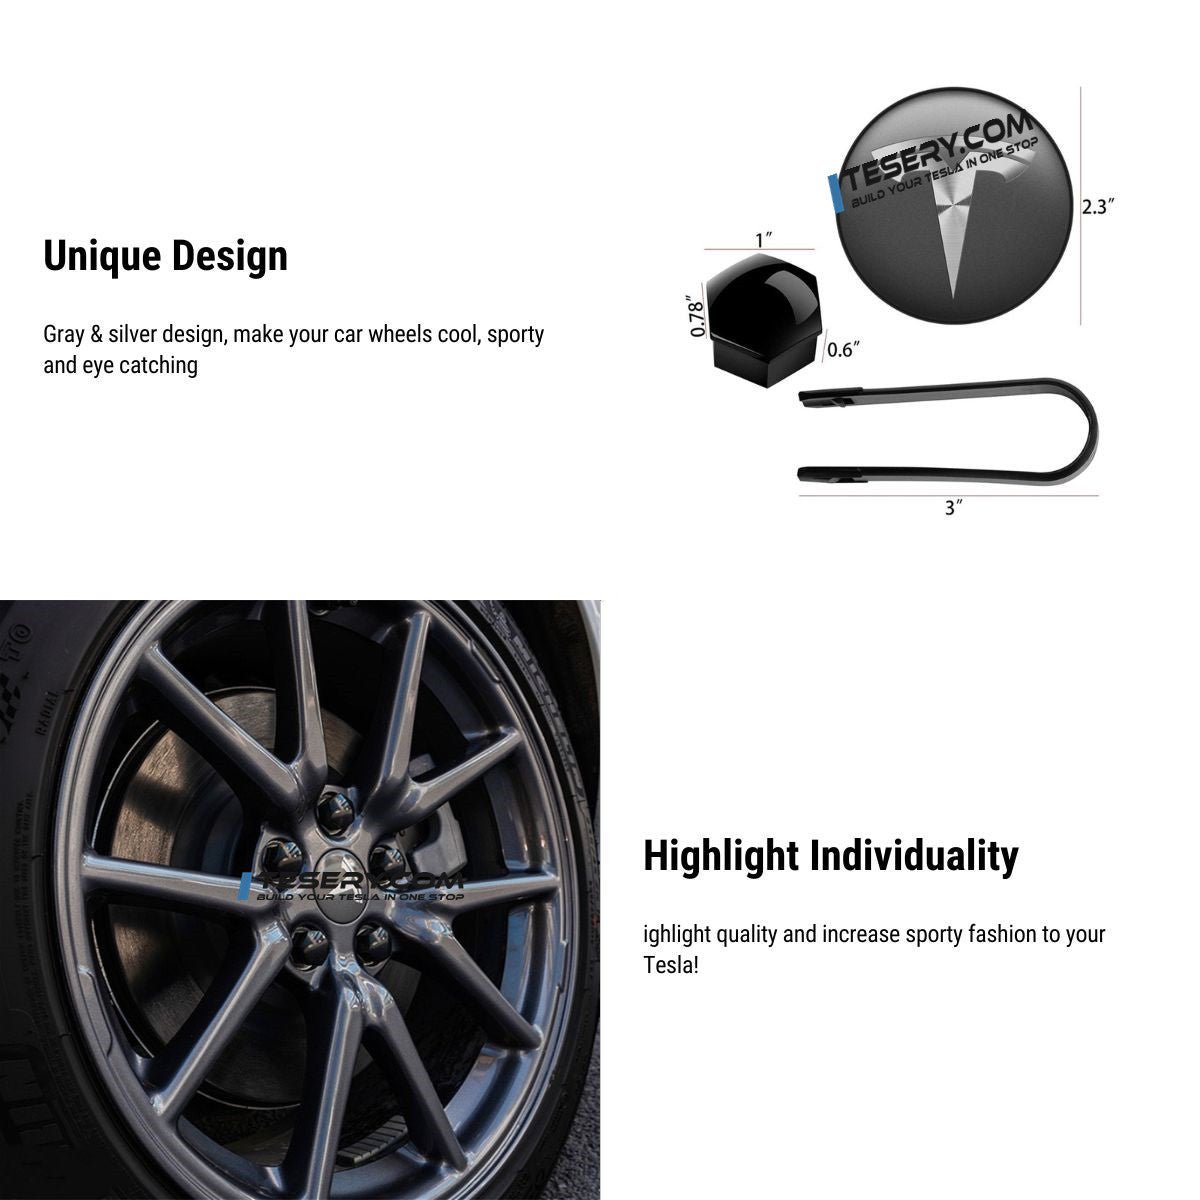 Center Wheel Center Cap Kit With Puller for Tesla Model 3/Y/S/X - Tesery Official Store